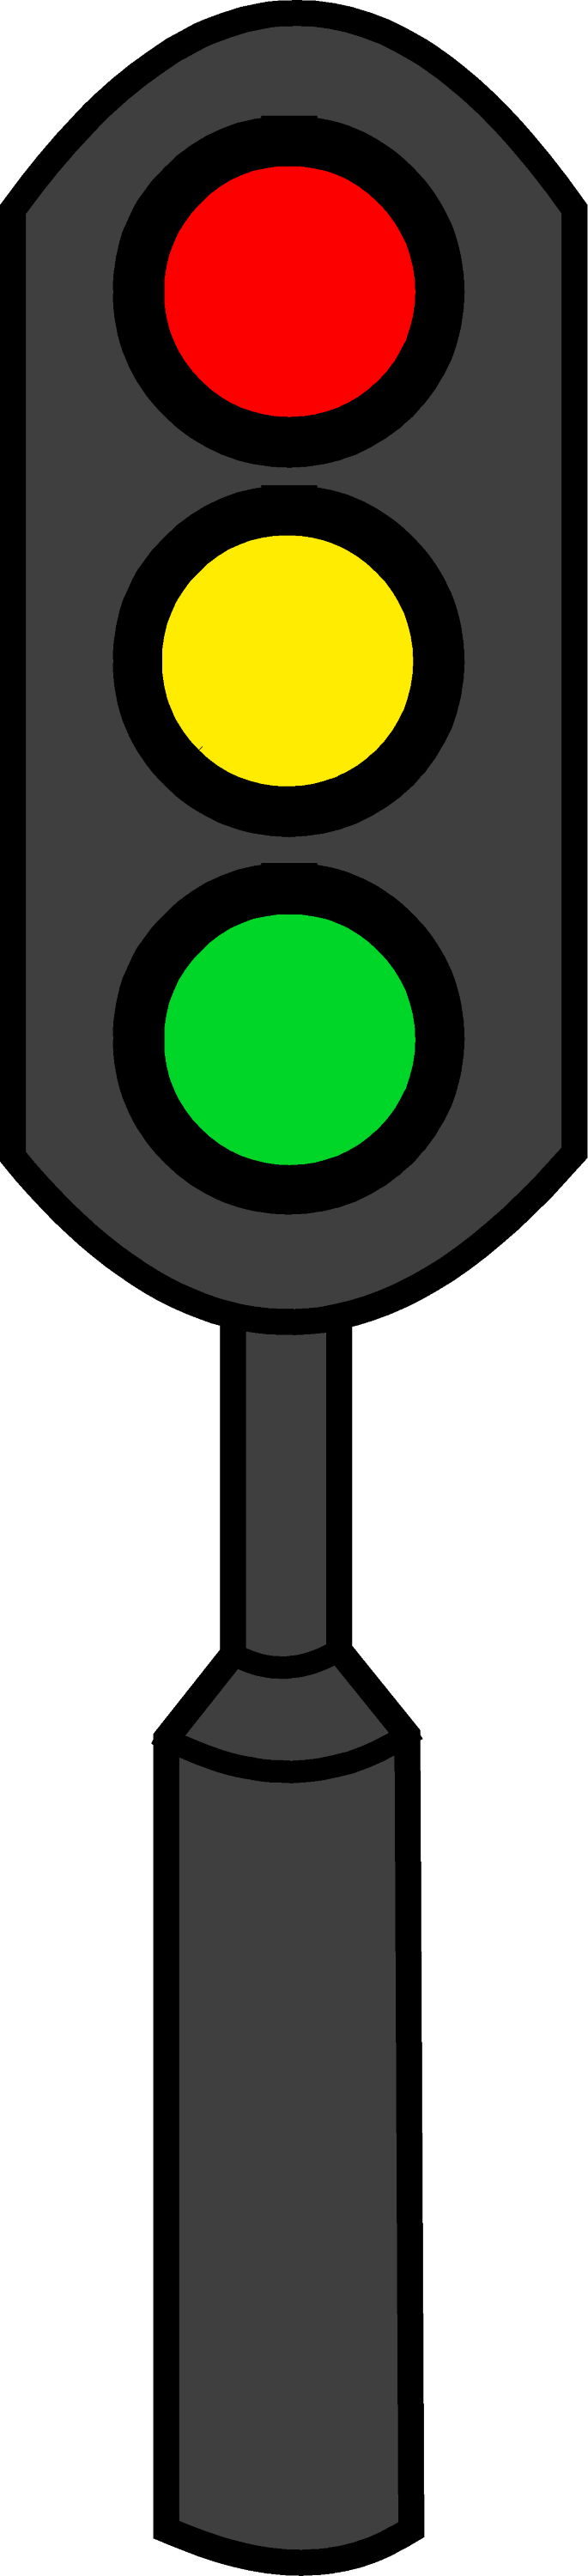 clipart green traffic light - photo #29